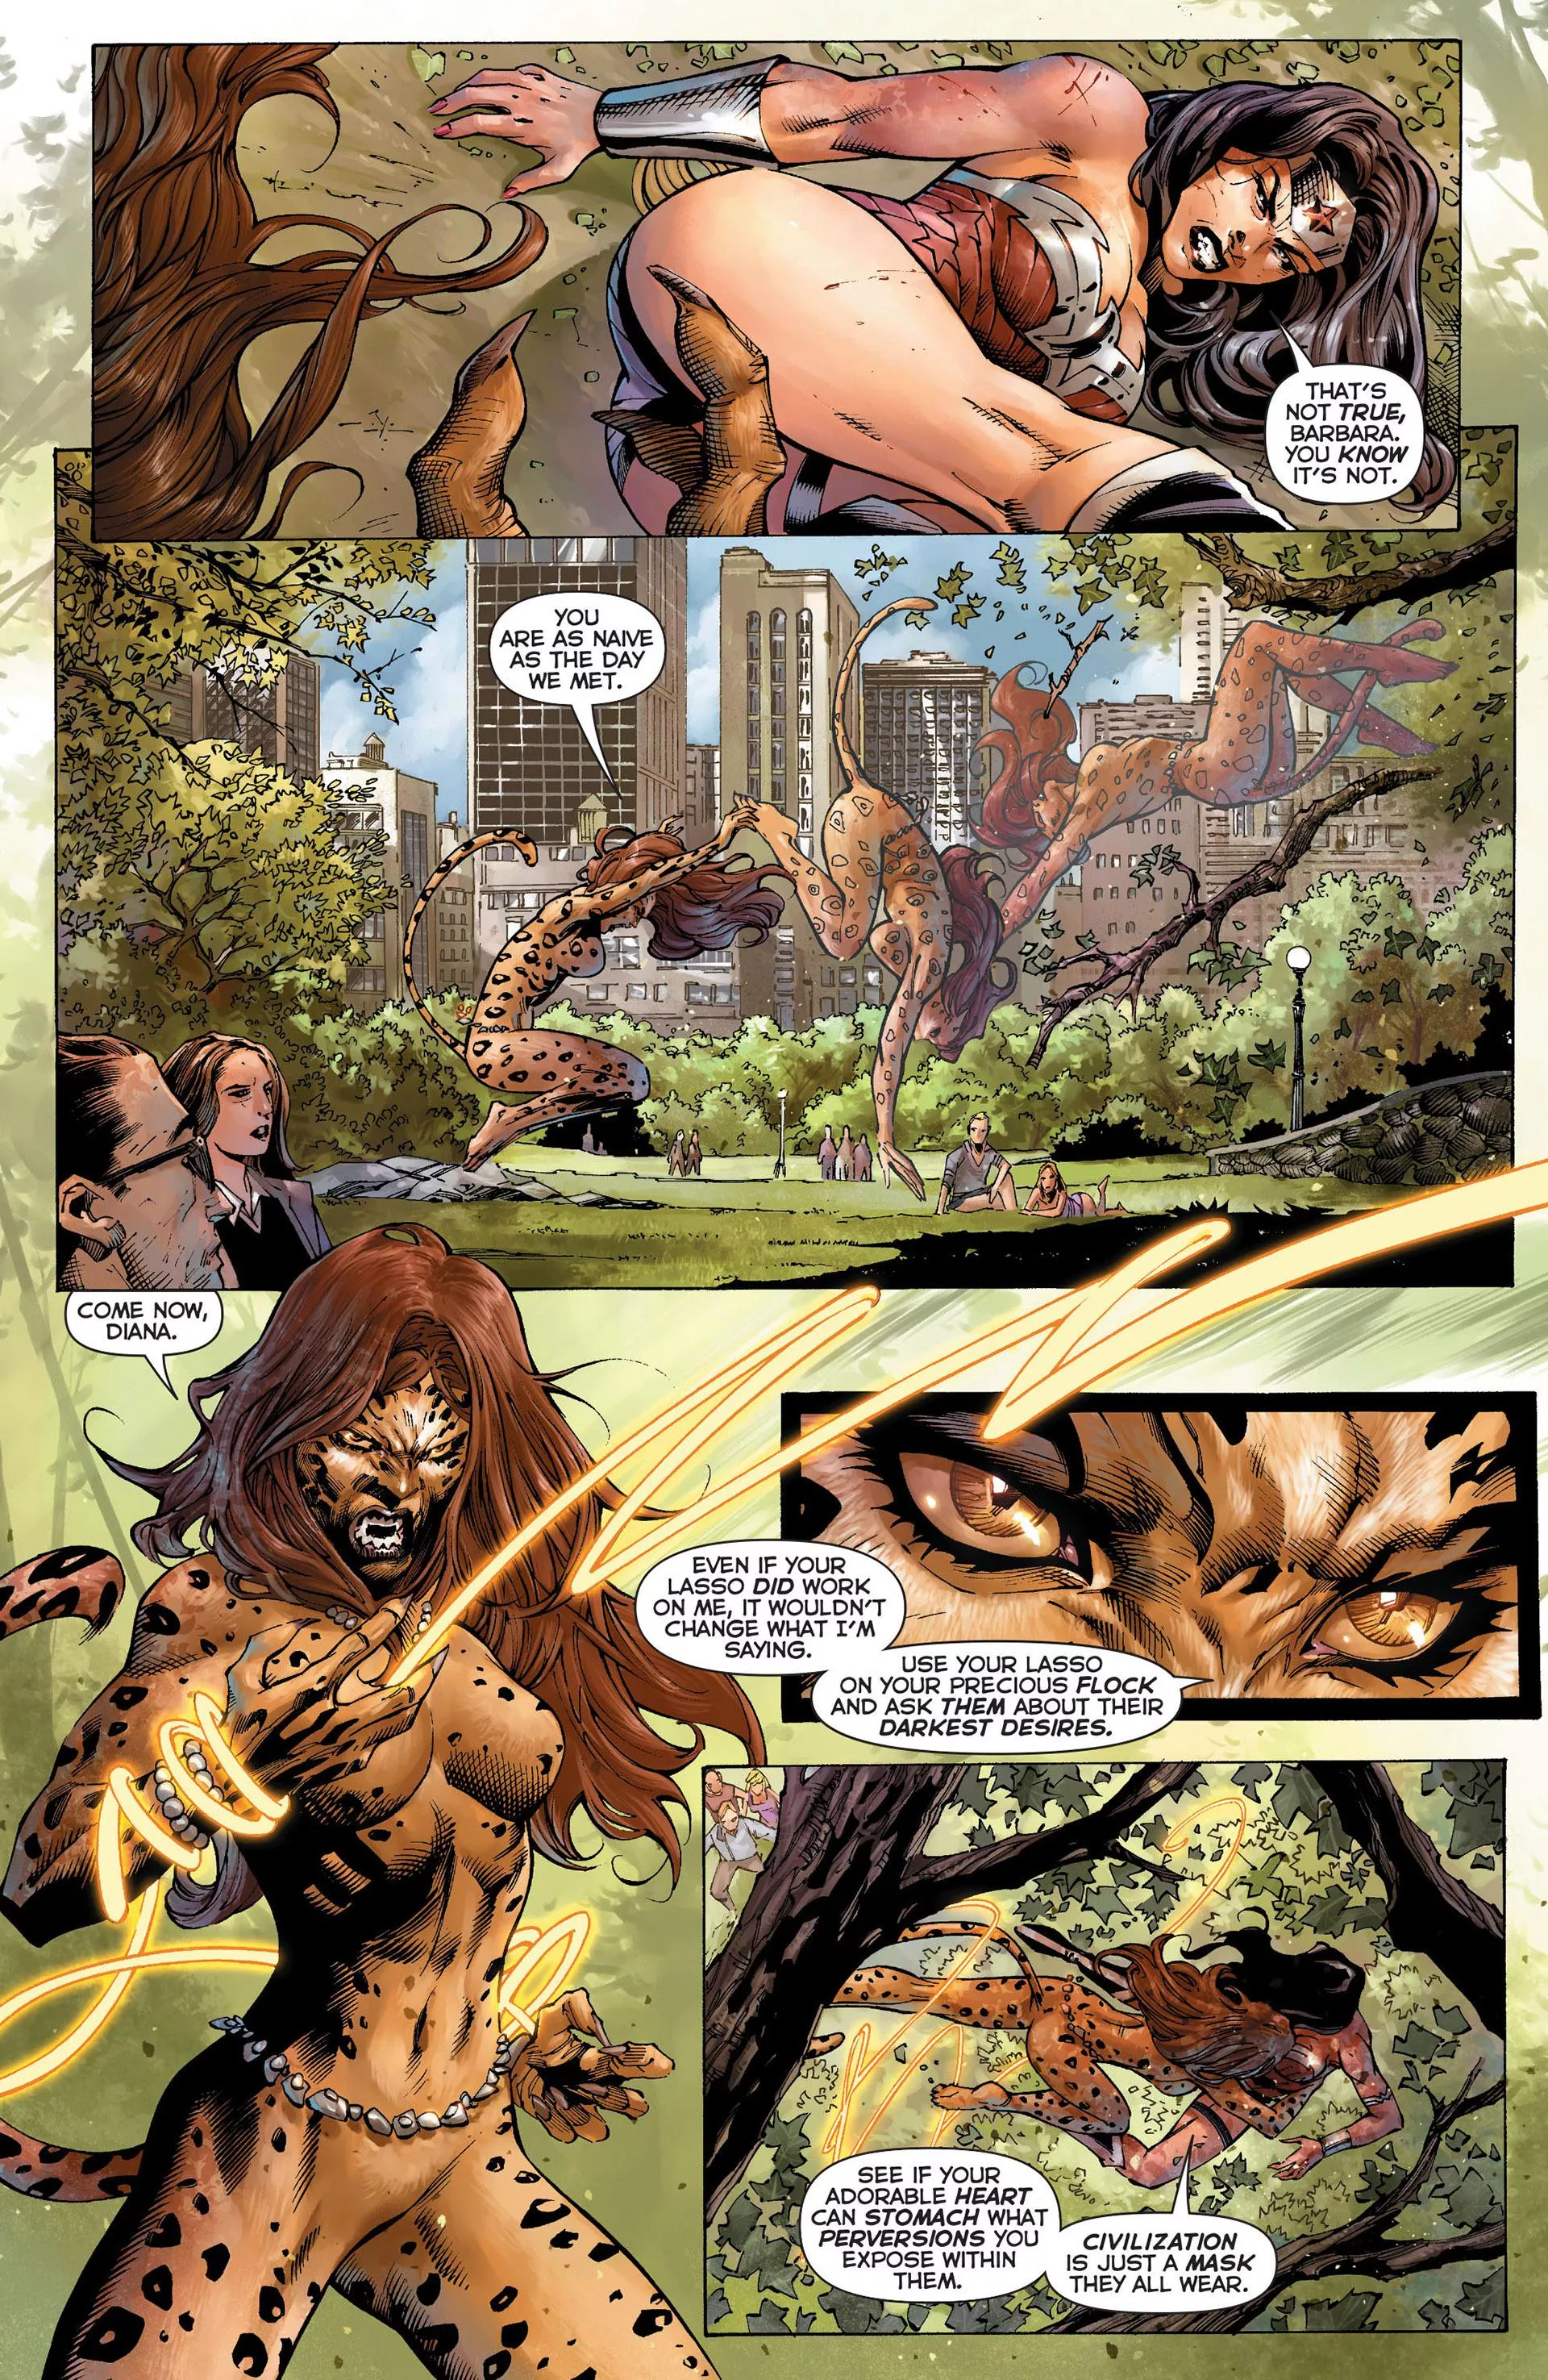 Wonder Woman Cheetah Lesbian Hentai - Wonder Woman and Cheetah [Justice League (2011) #13] nudes : ComicPlot |  NUDE-PICS.ORG